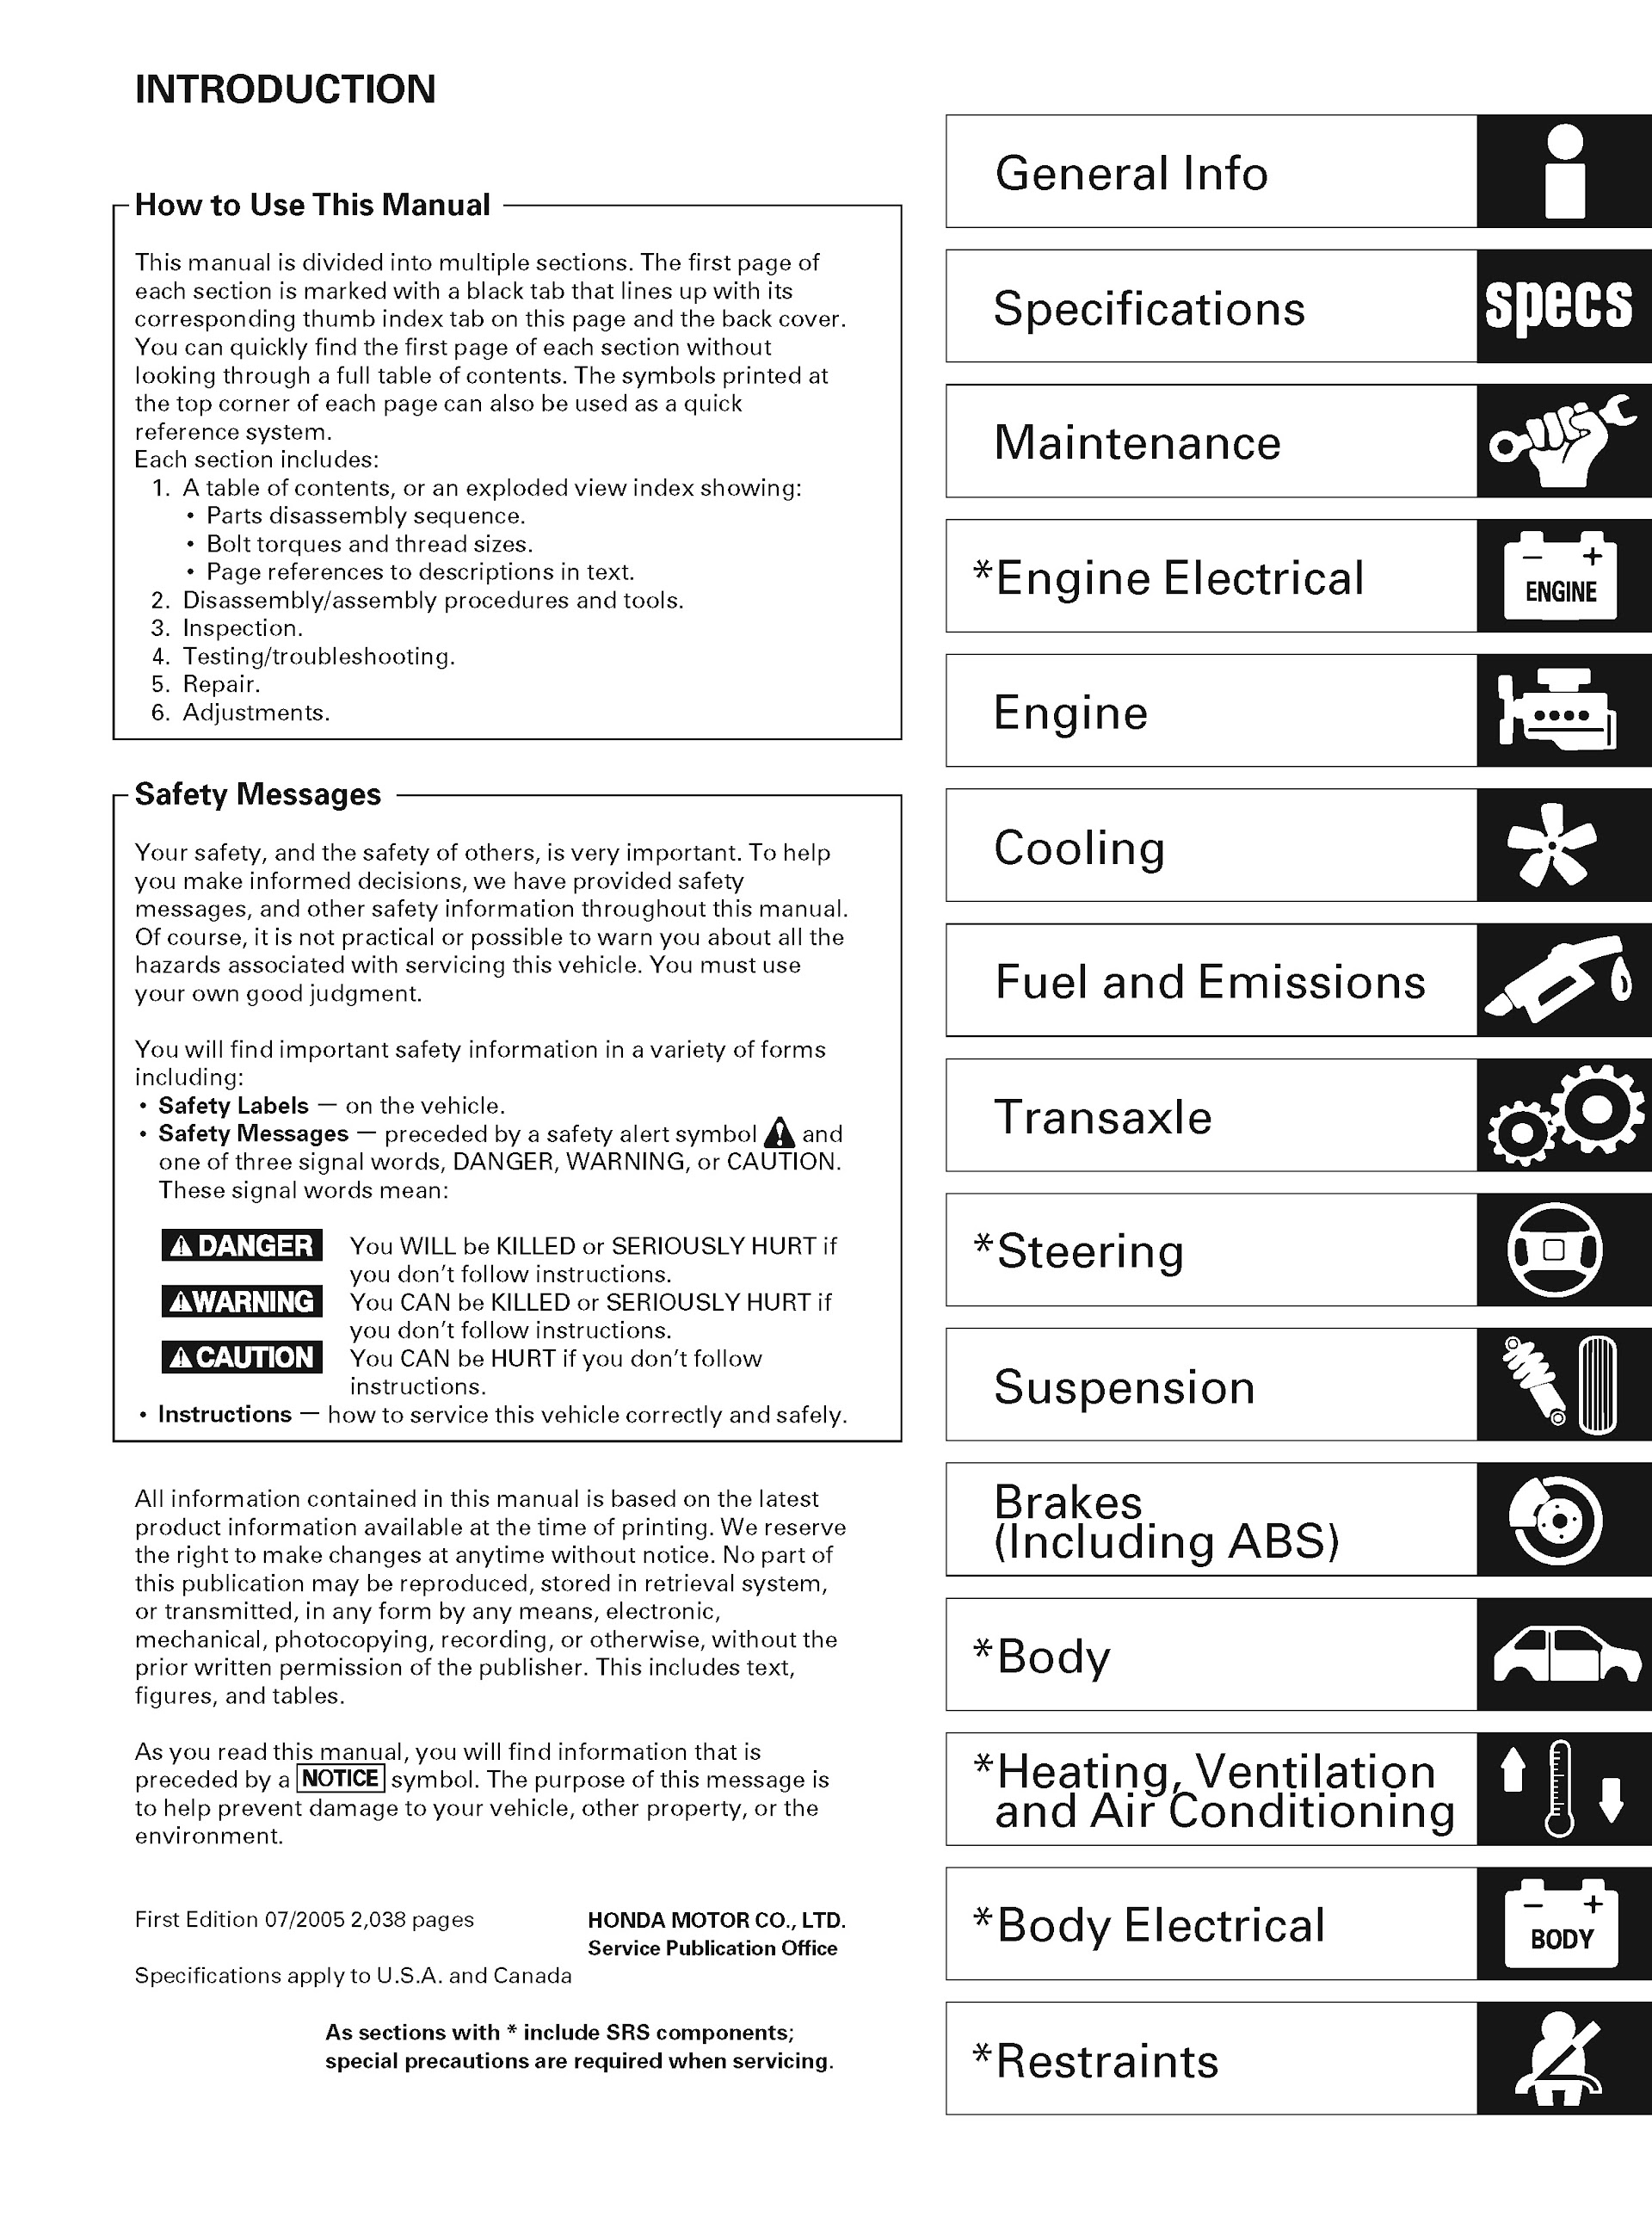 Contents 2006 Acura RSX Repair Manual